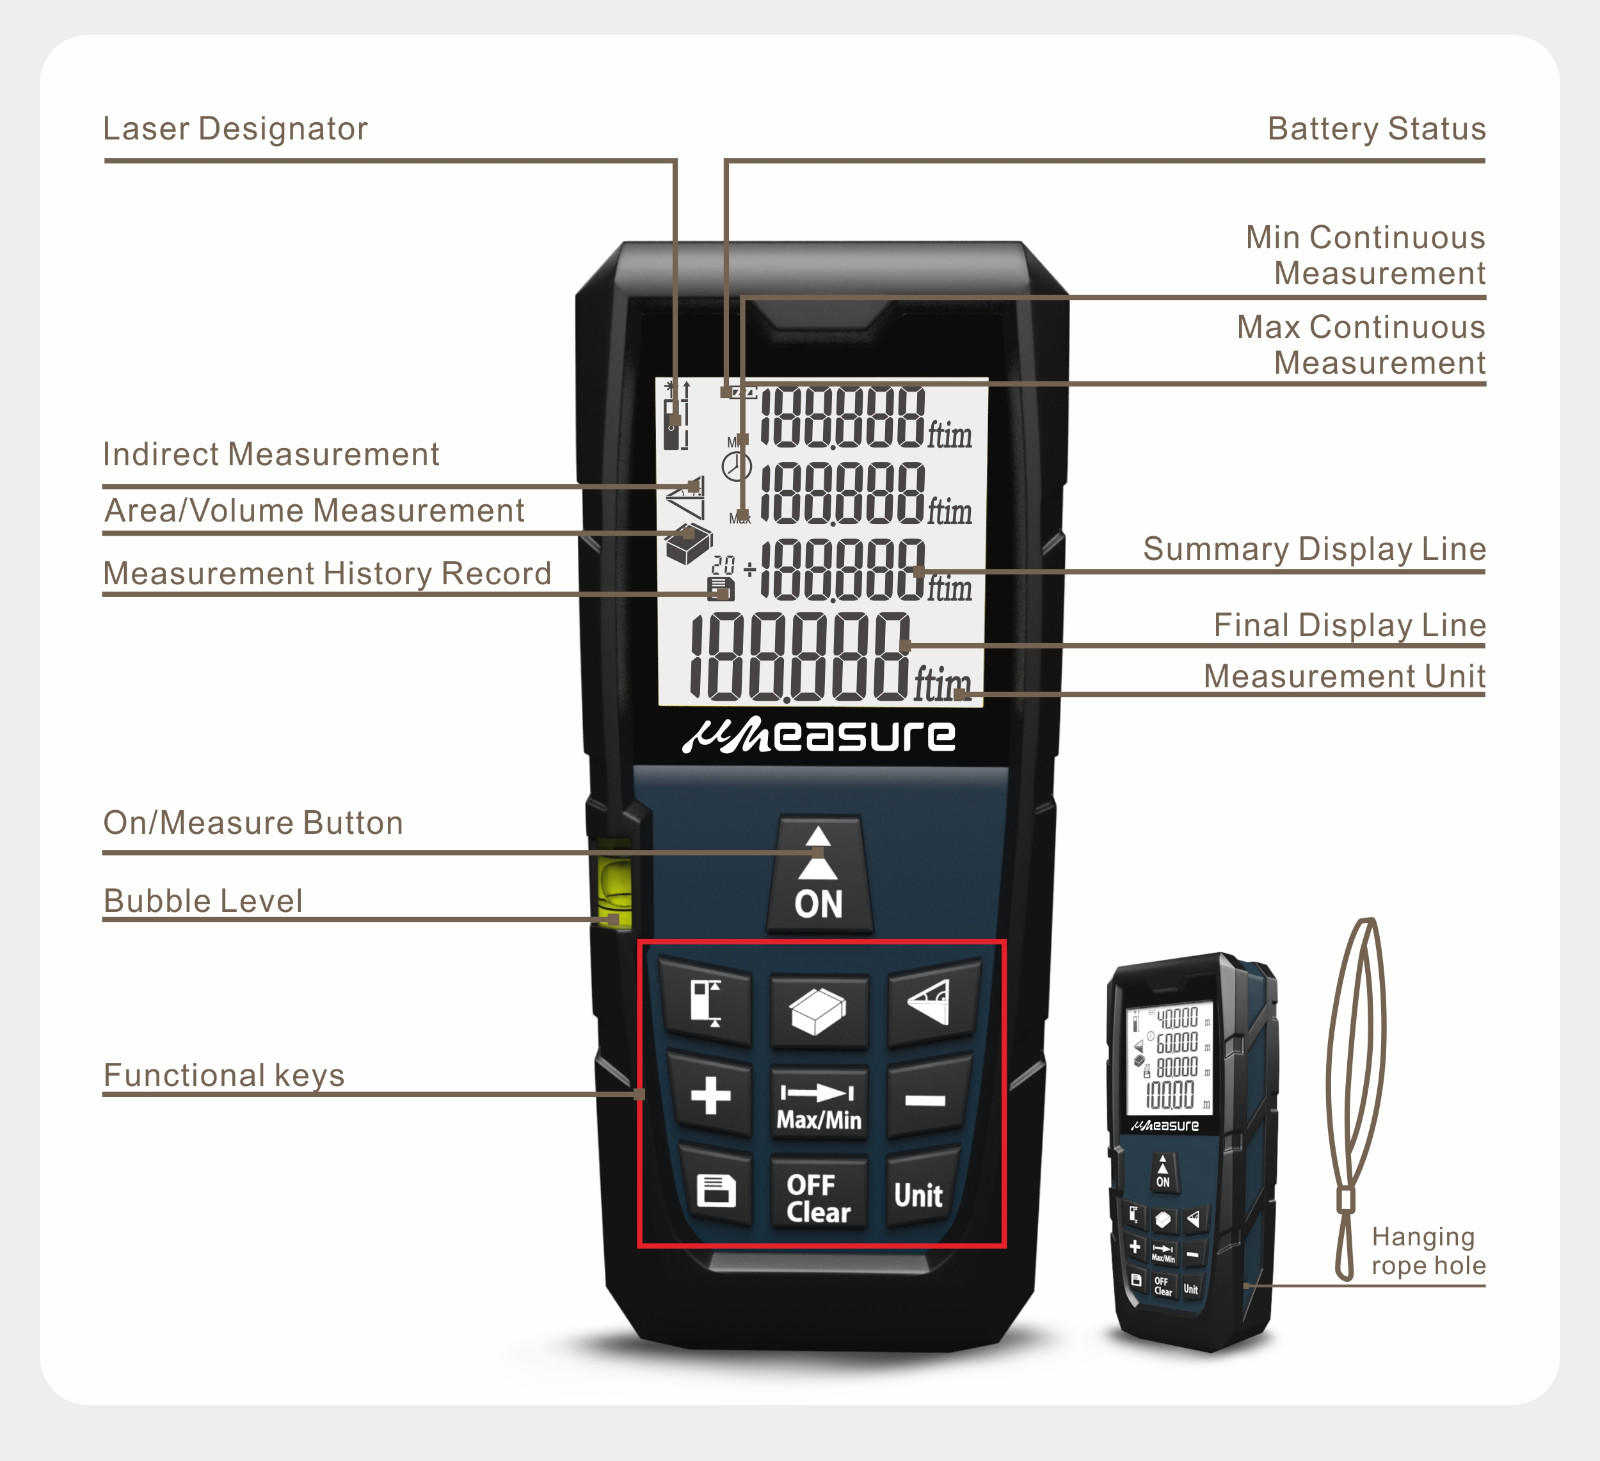 laser range meter backlit screen meter UMeasure Brand company